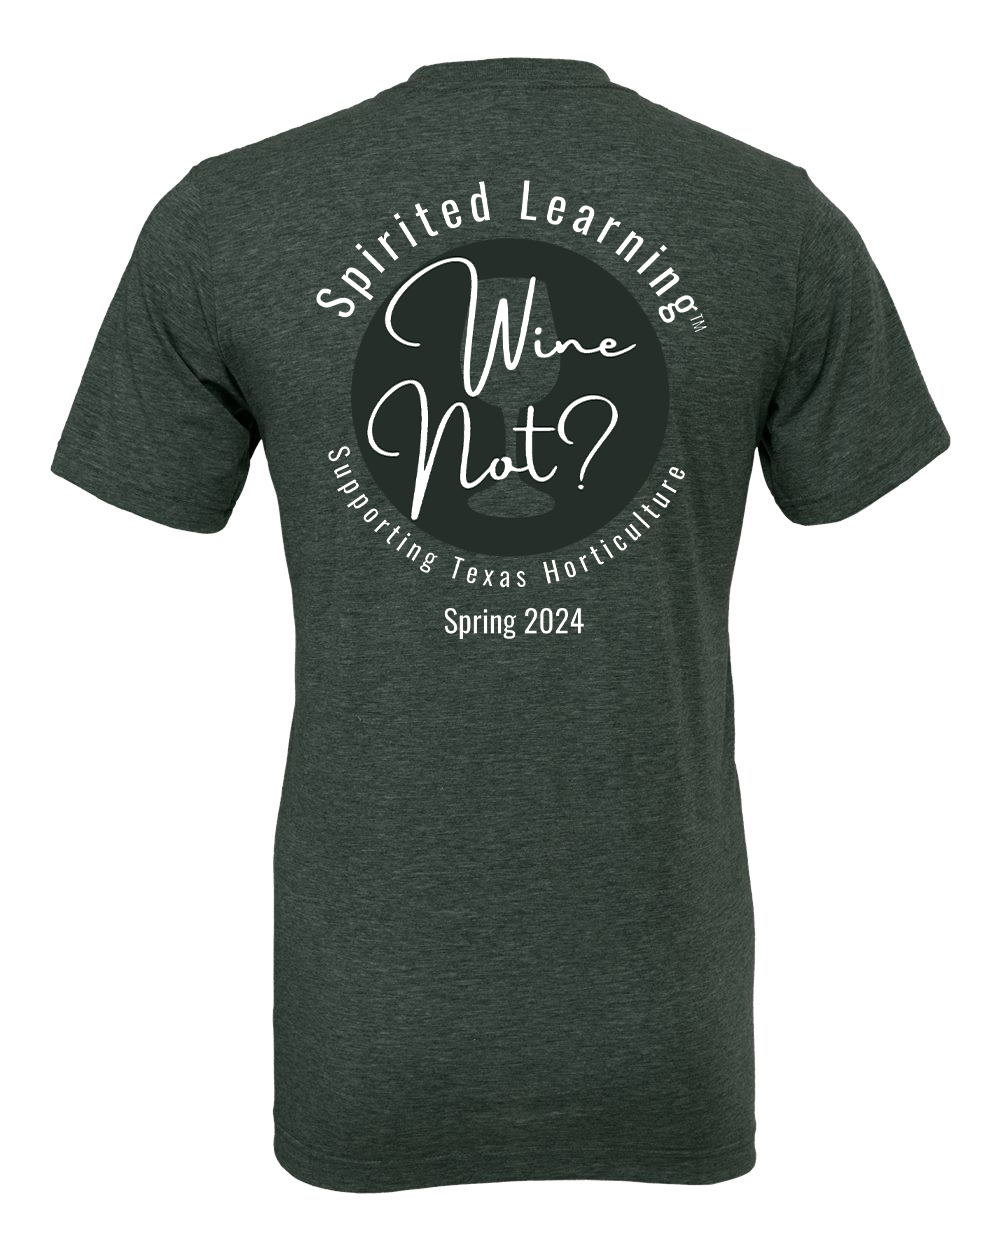 Spring 2024 Spirited Learning T-Shirt